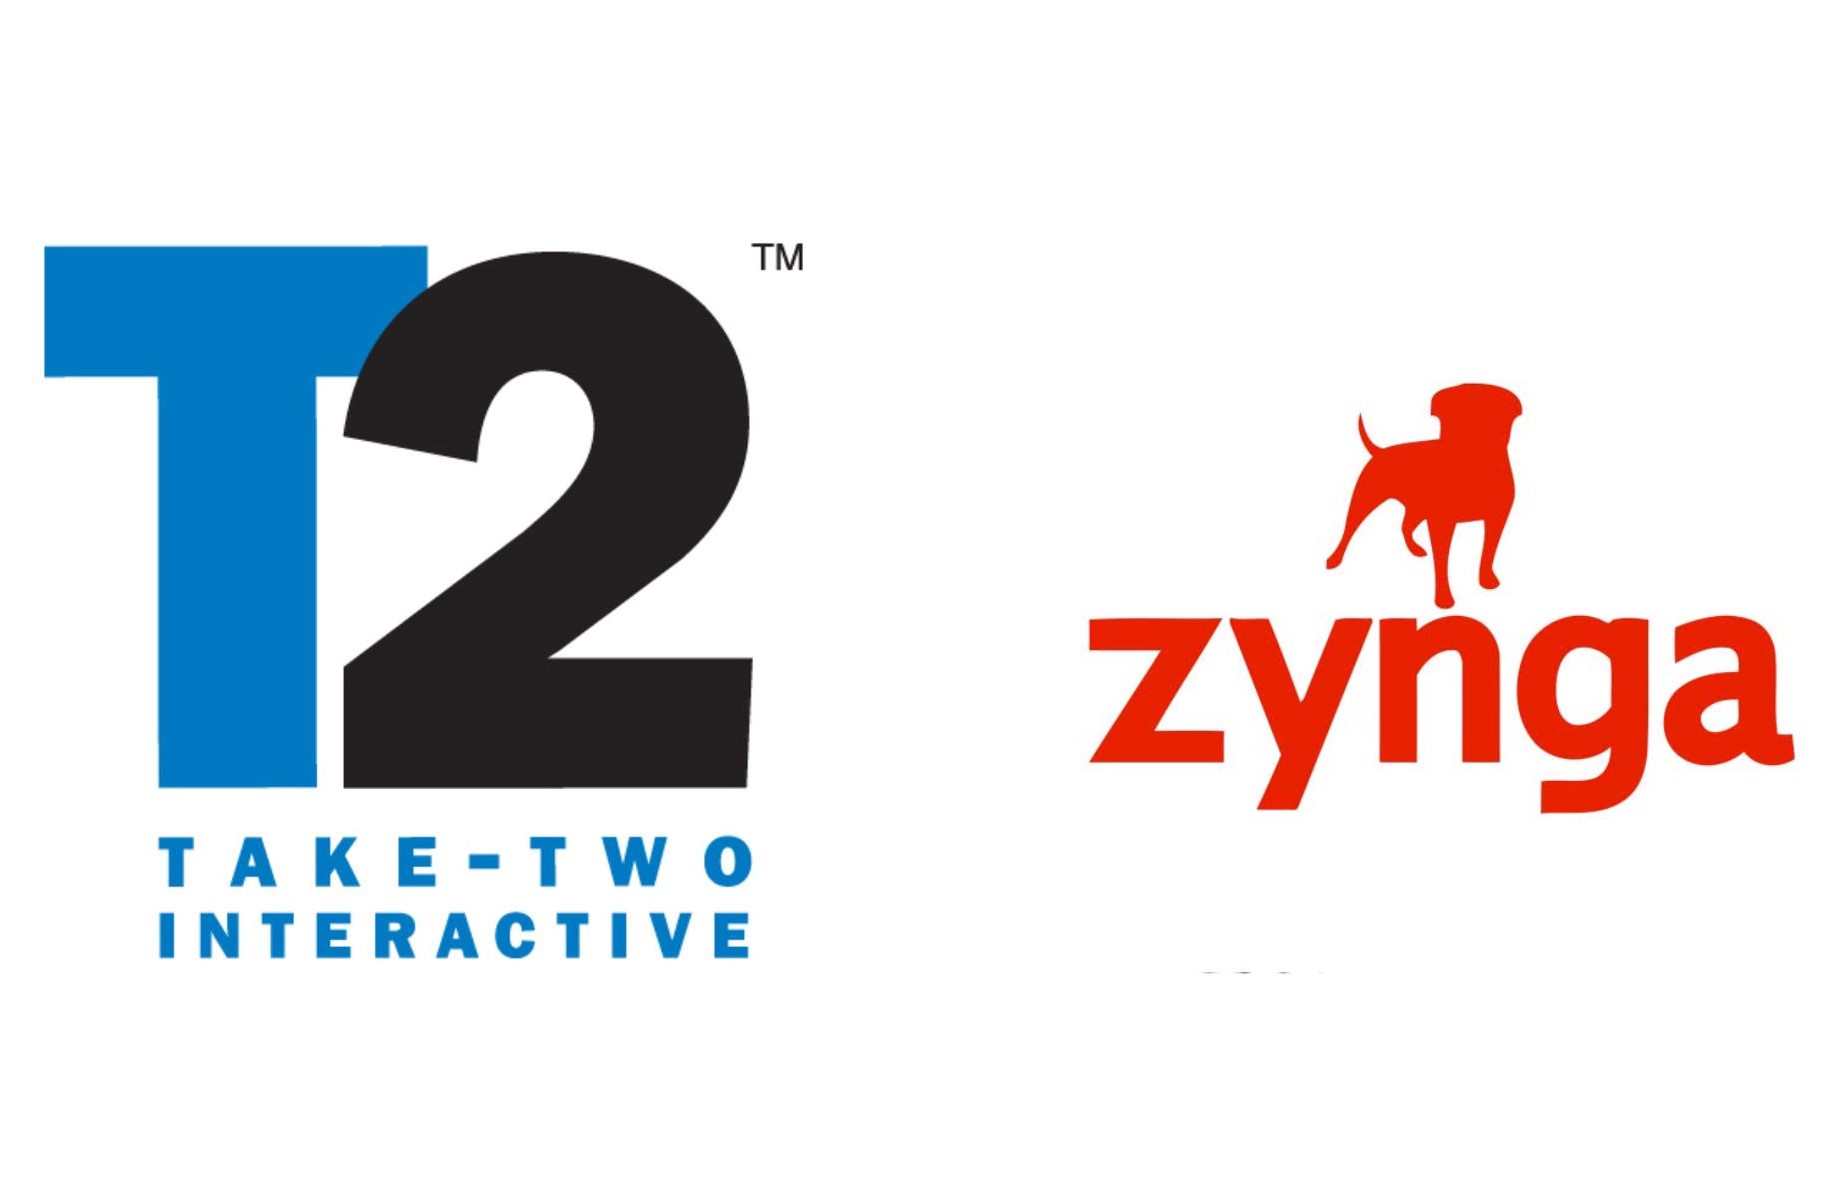 Take-Two akvizícia Zynga